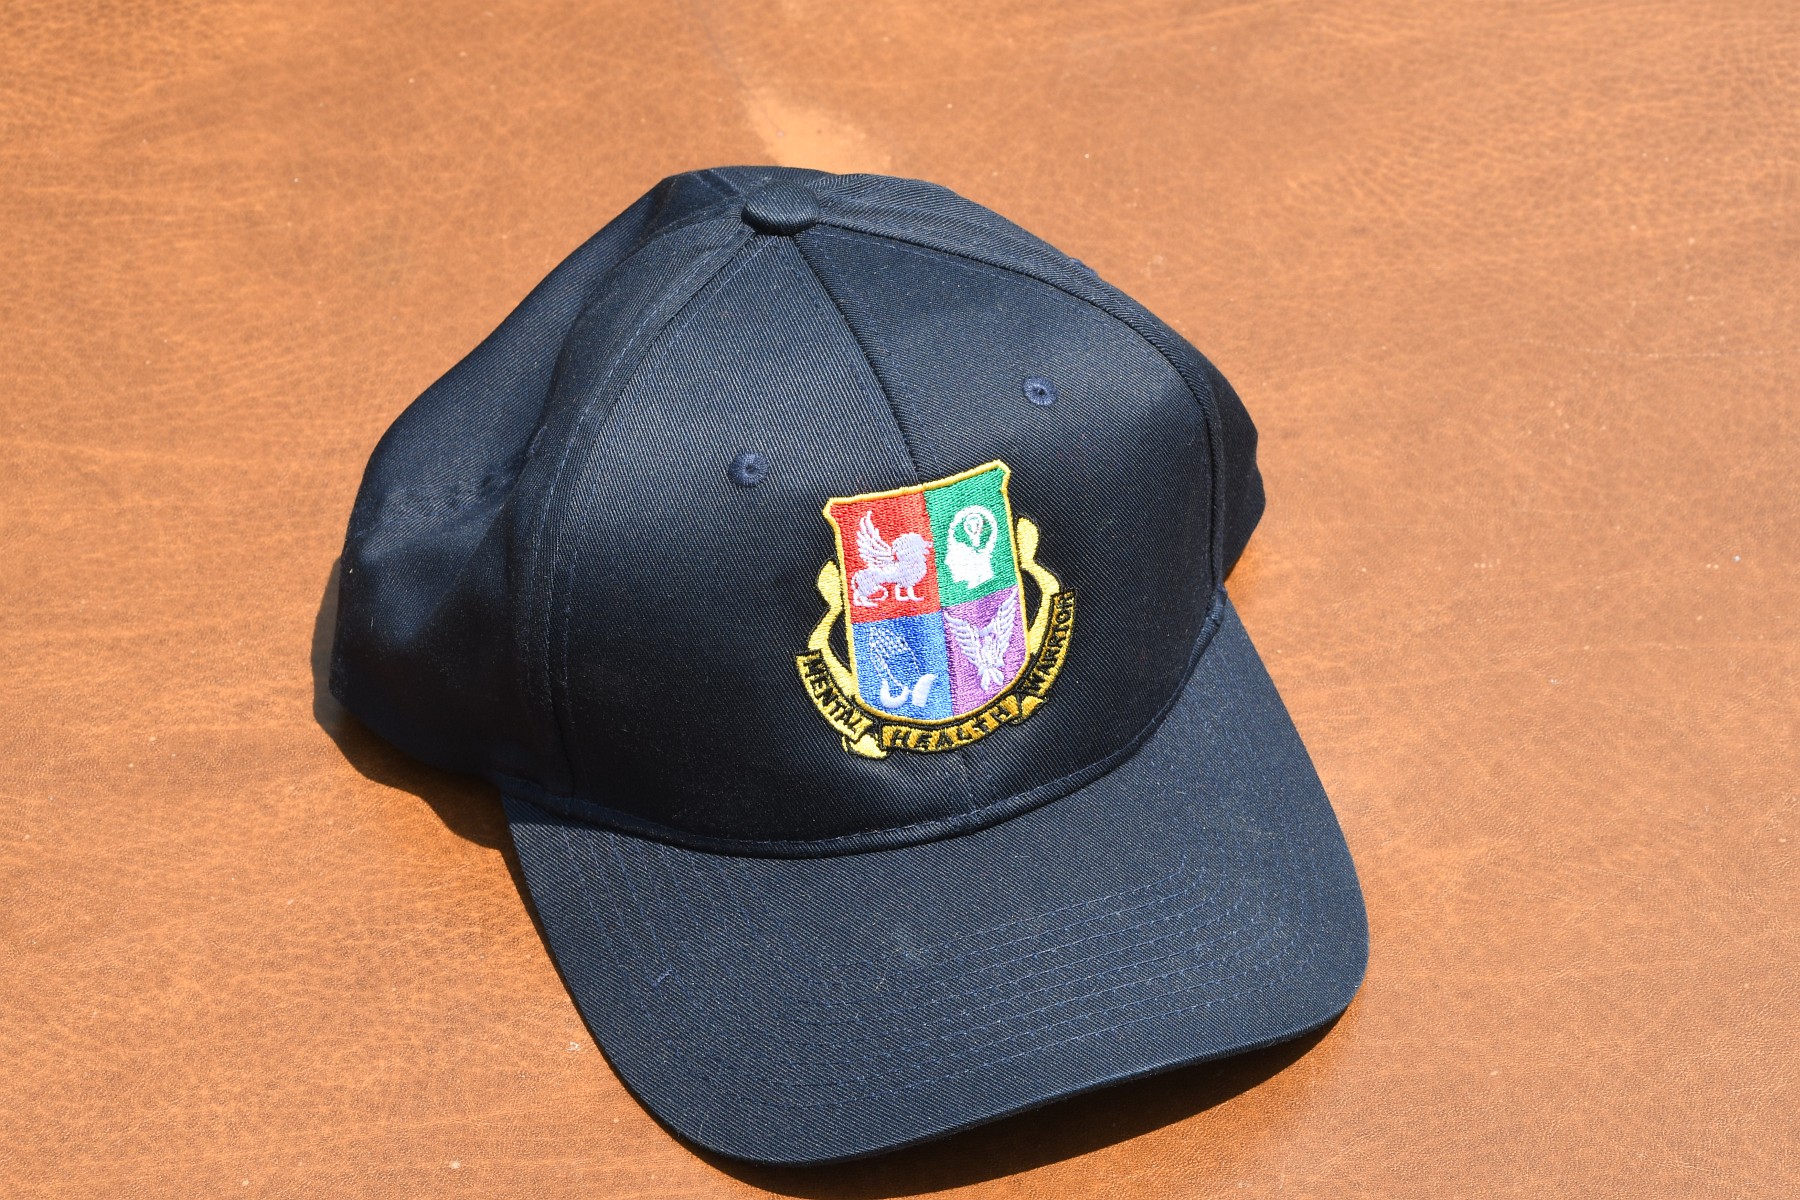 Mental Health Warrior navy baseball cap, front view